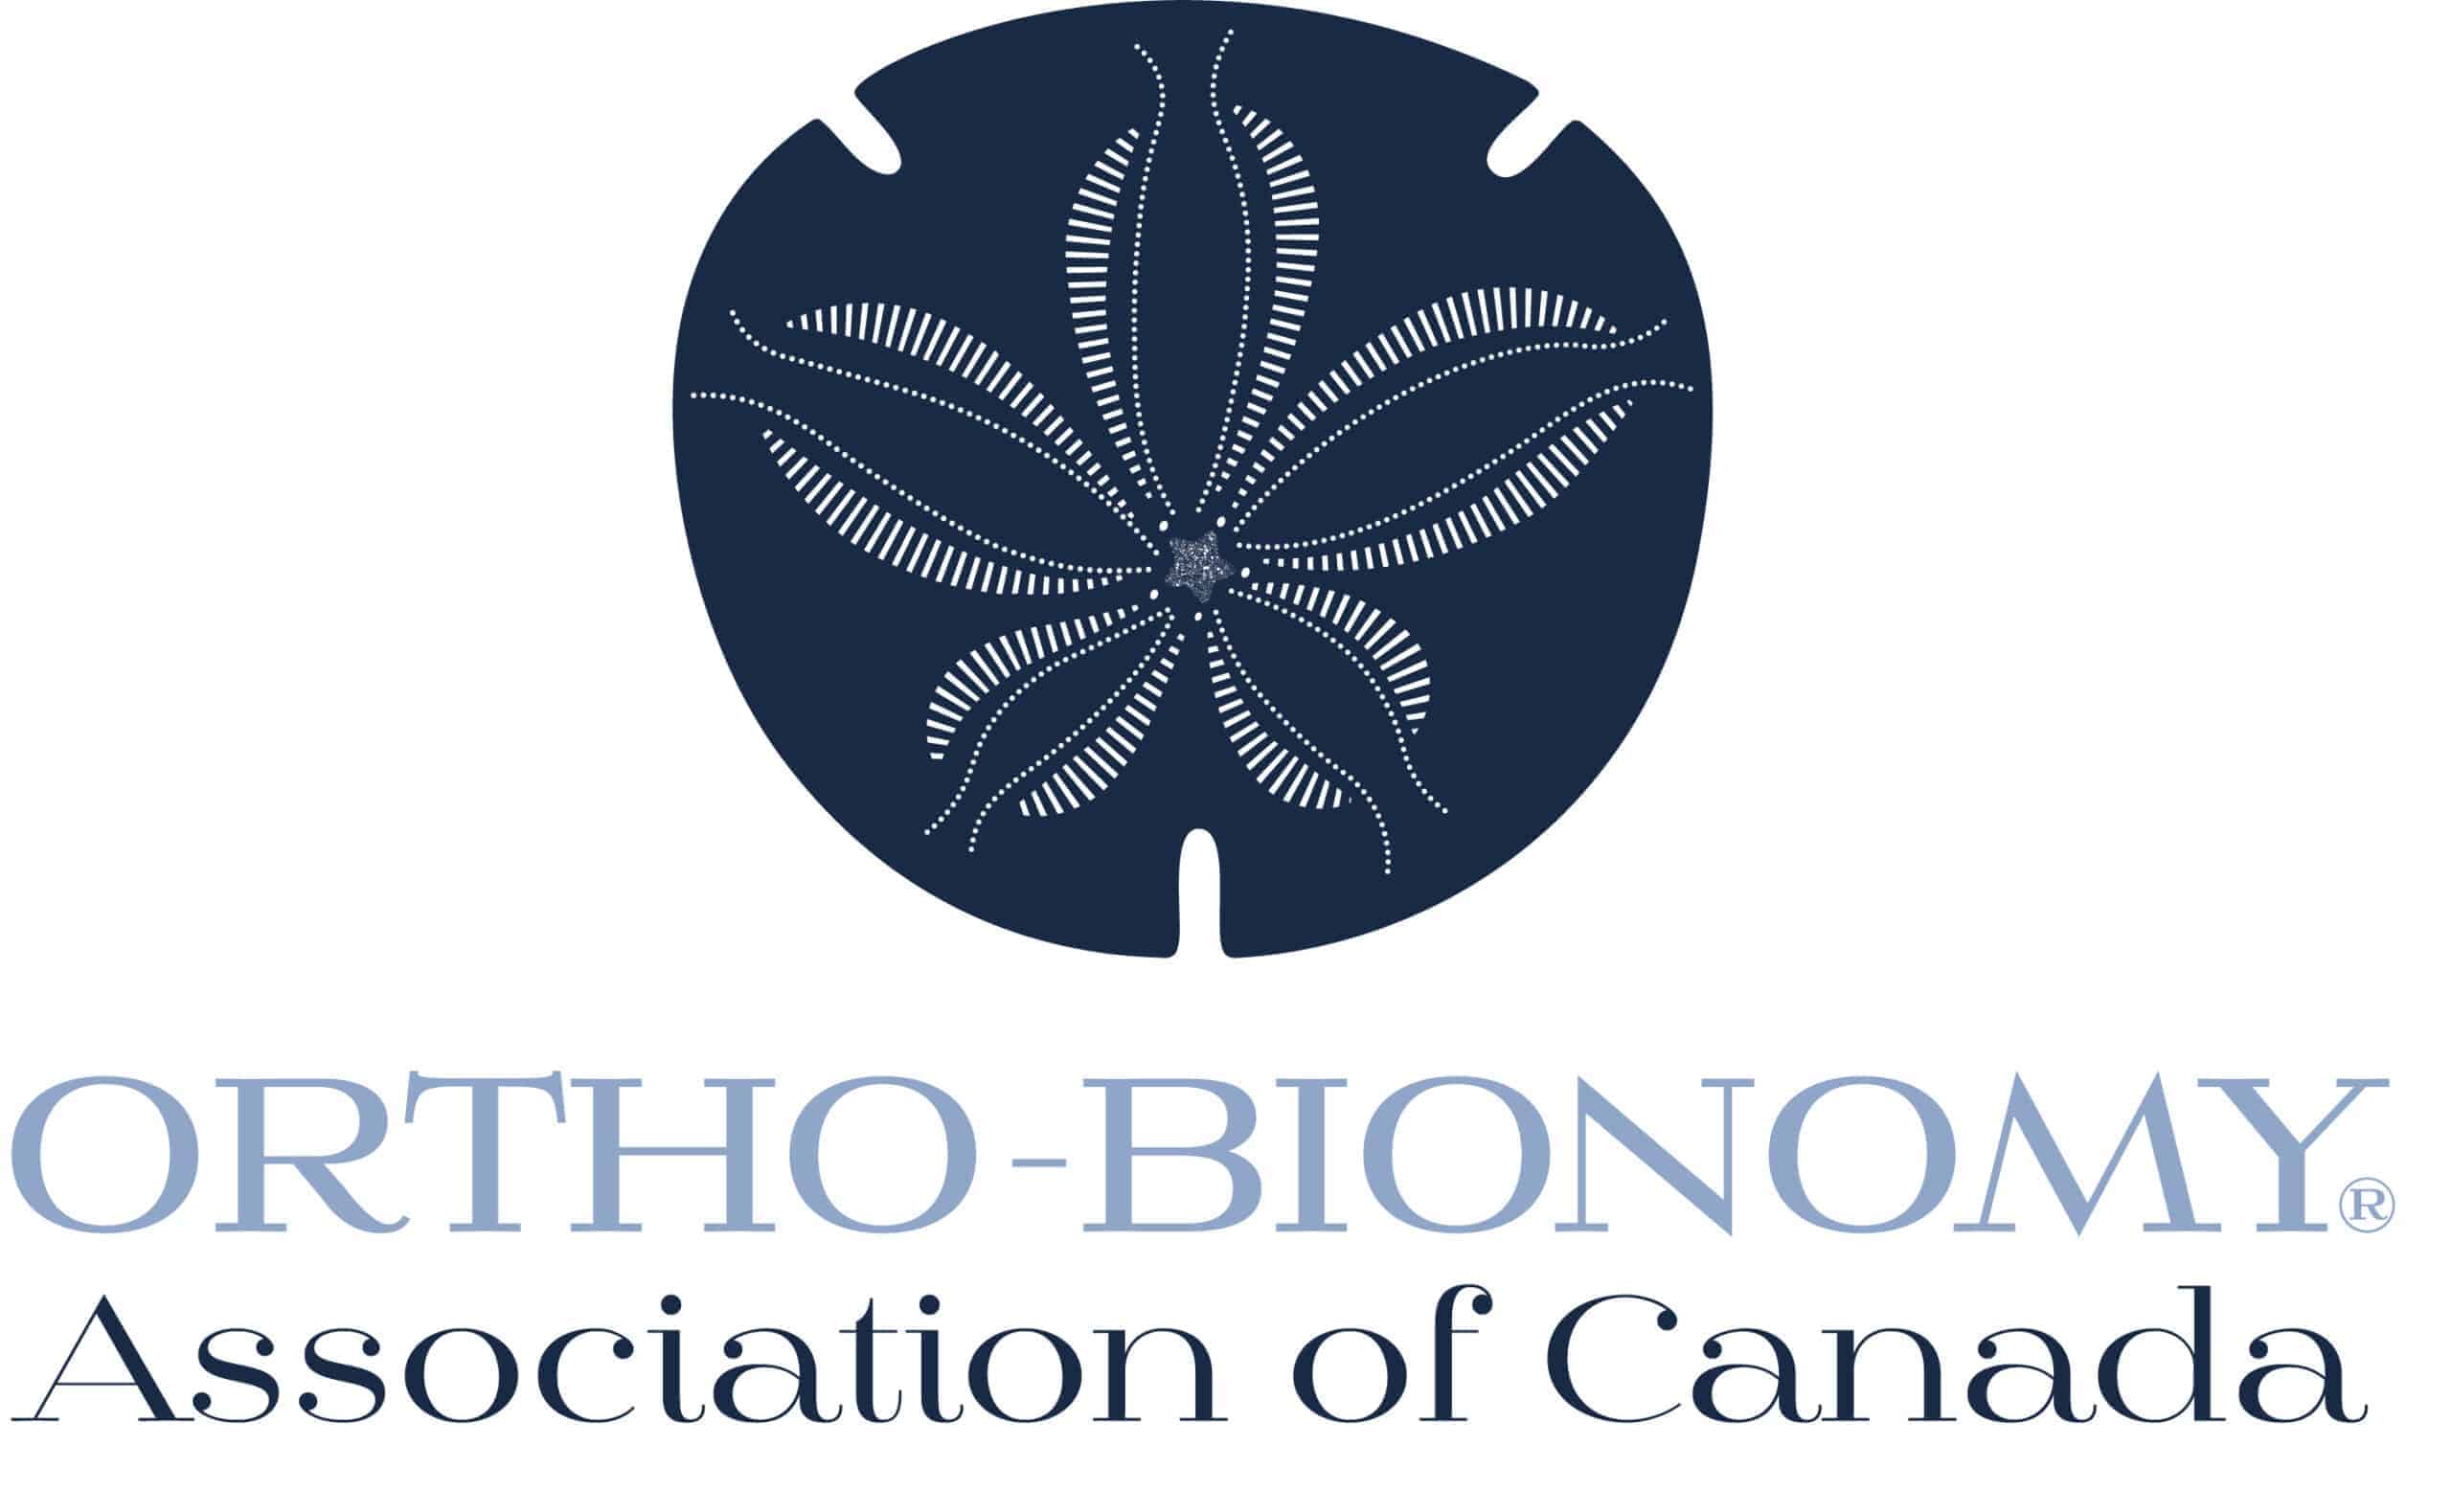 Ortho-Bionomy Association of Canada